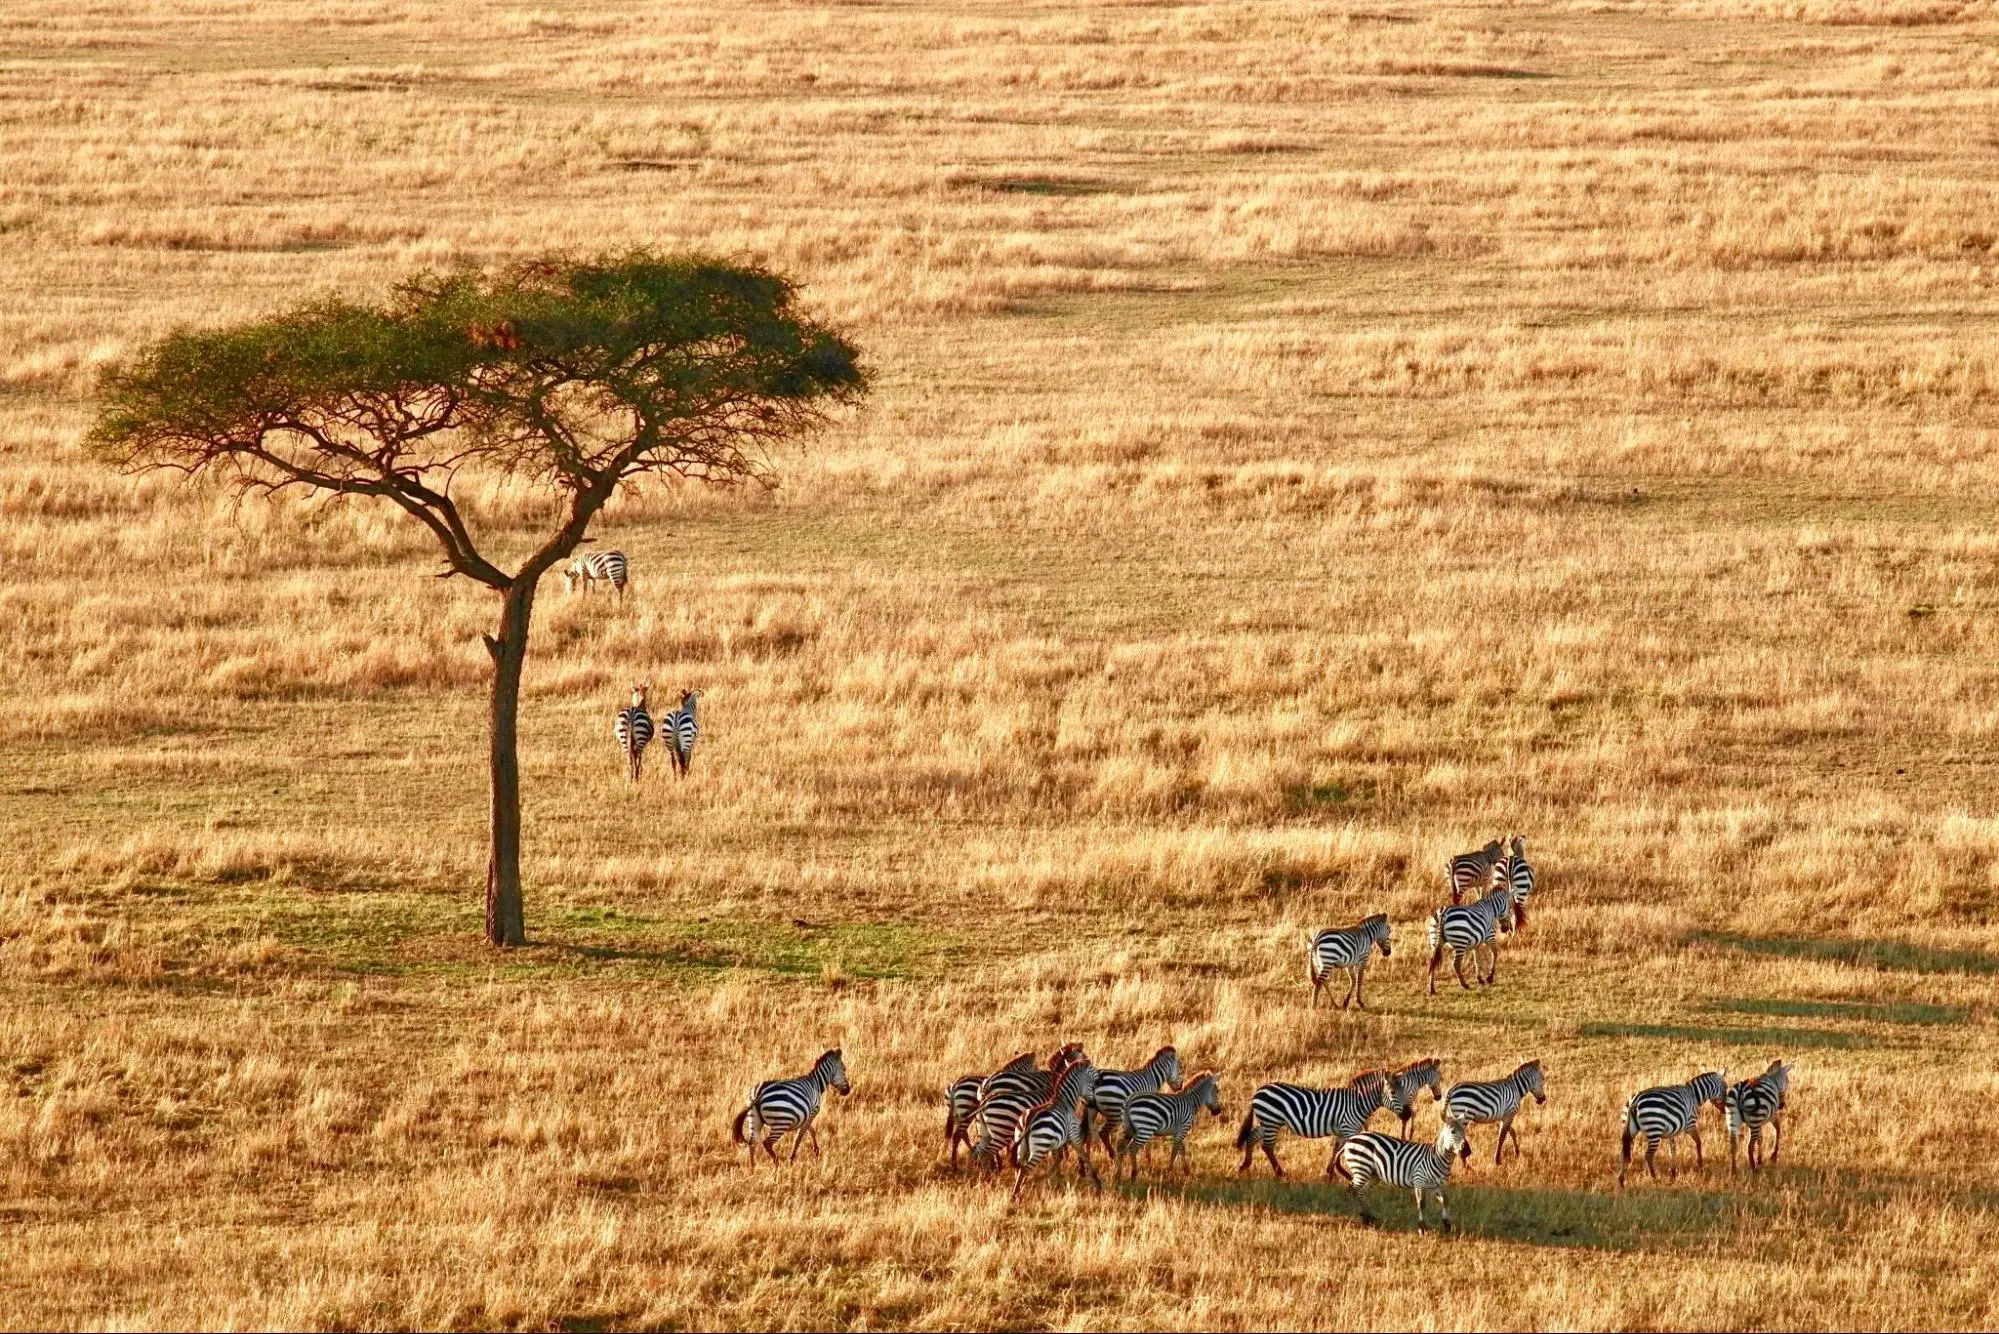 Zebras grazing near a lone tree in Serengeti National Park, Tanzania Safari.